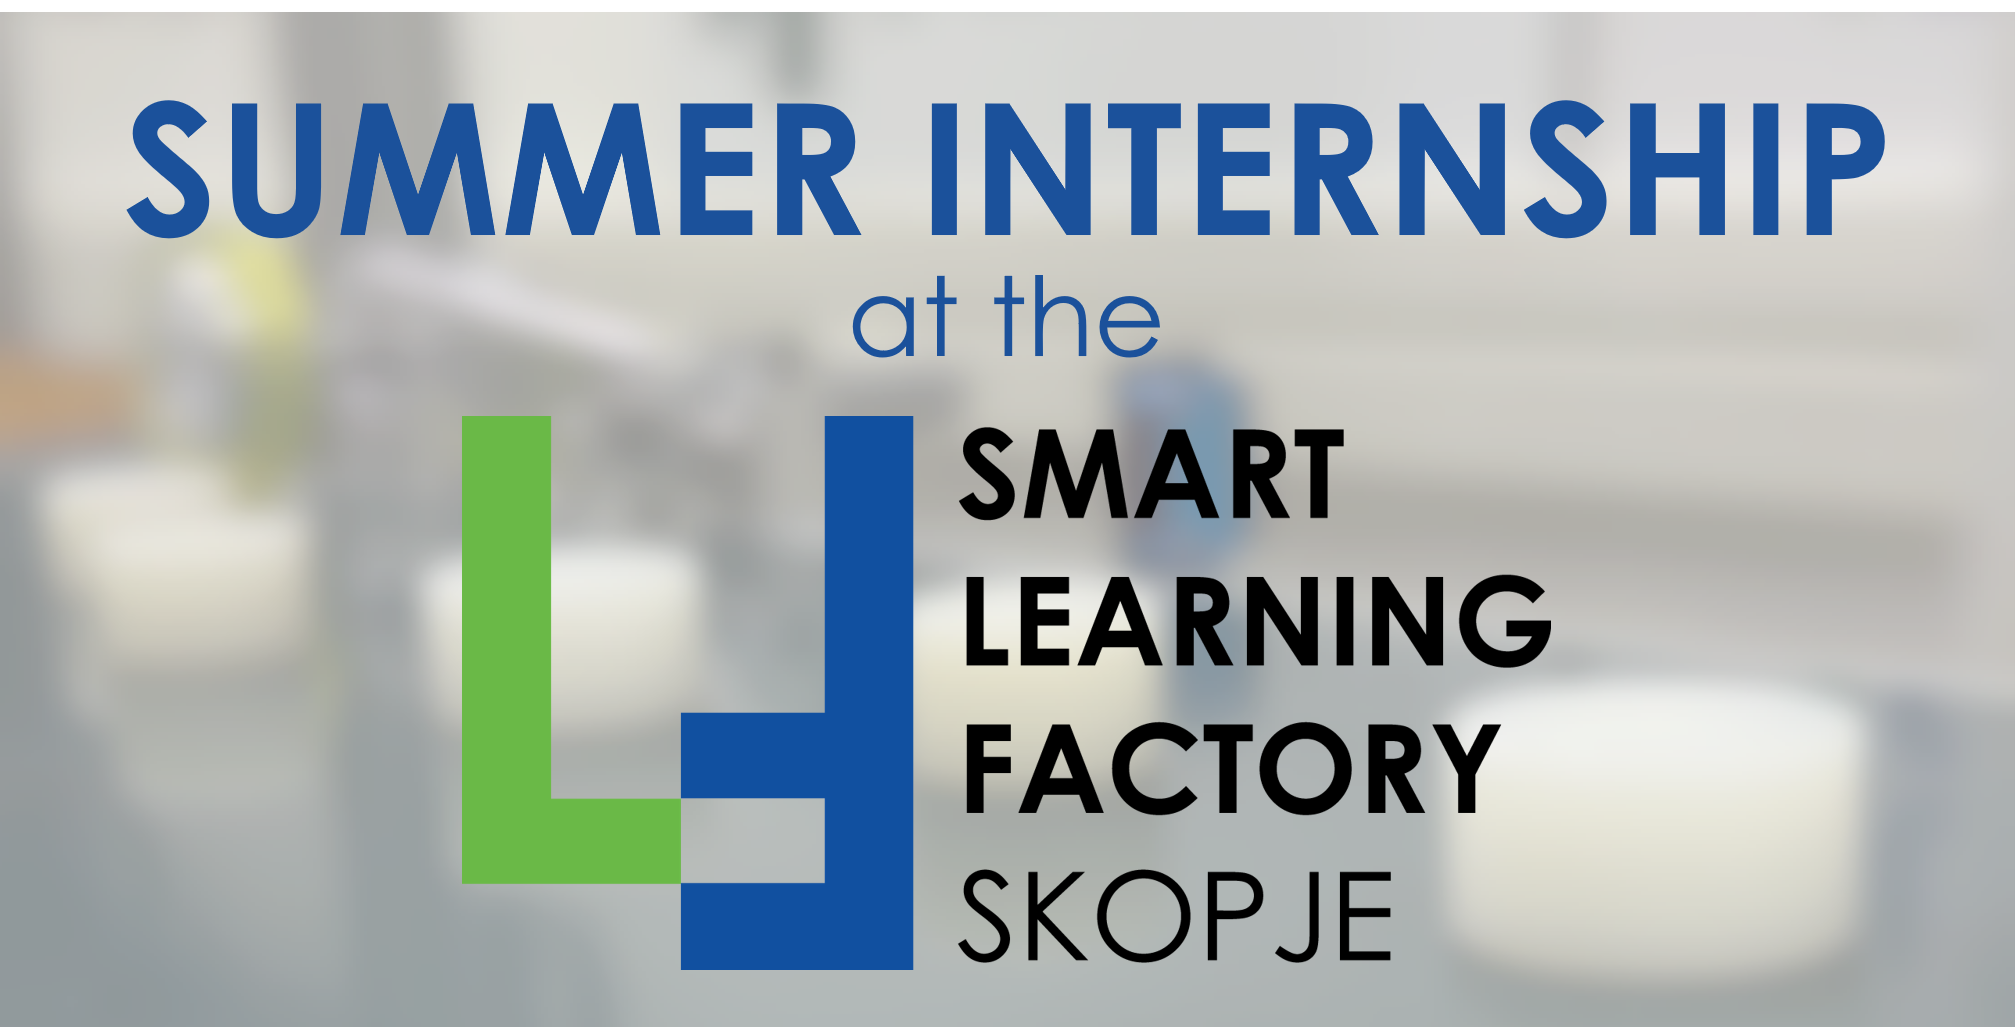 Summer internship at the Smart Learning Factory – Skopje